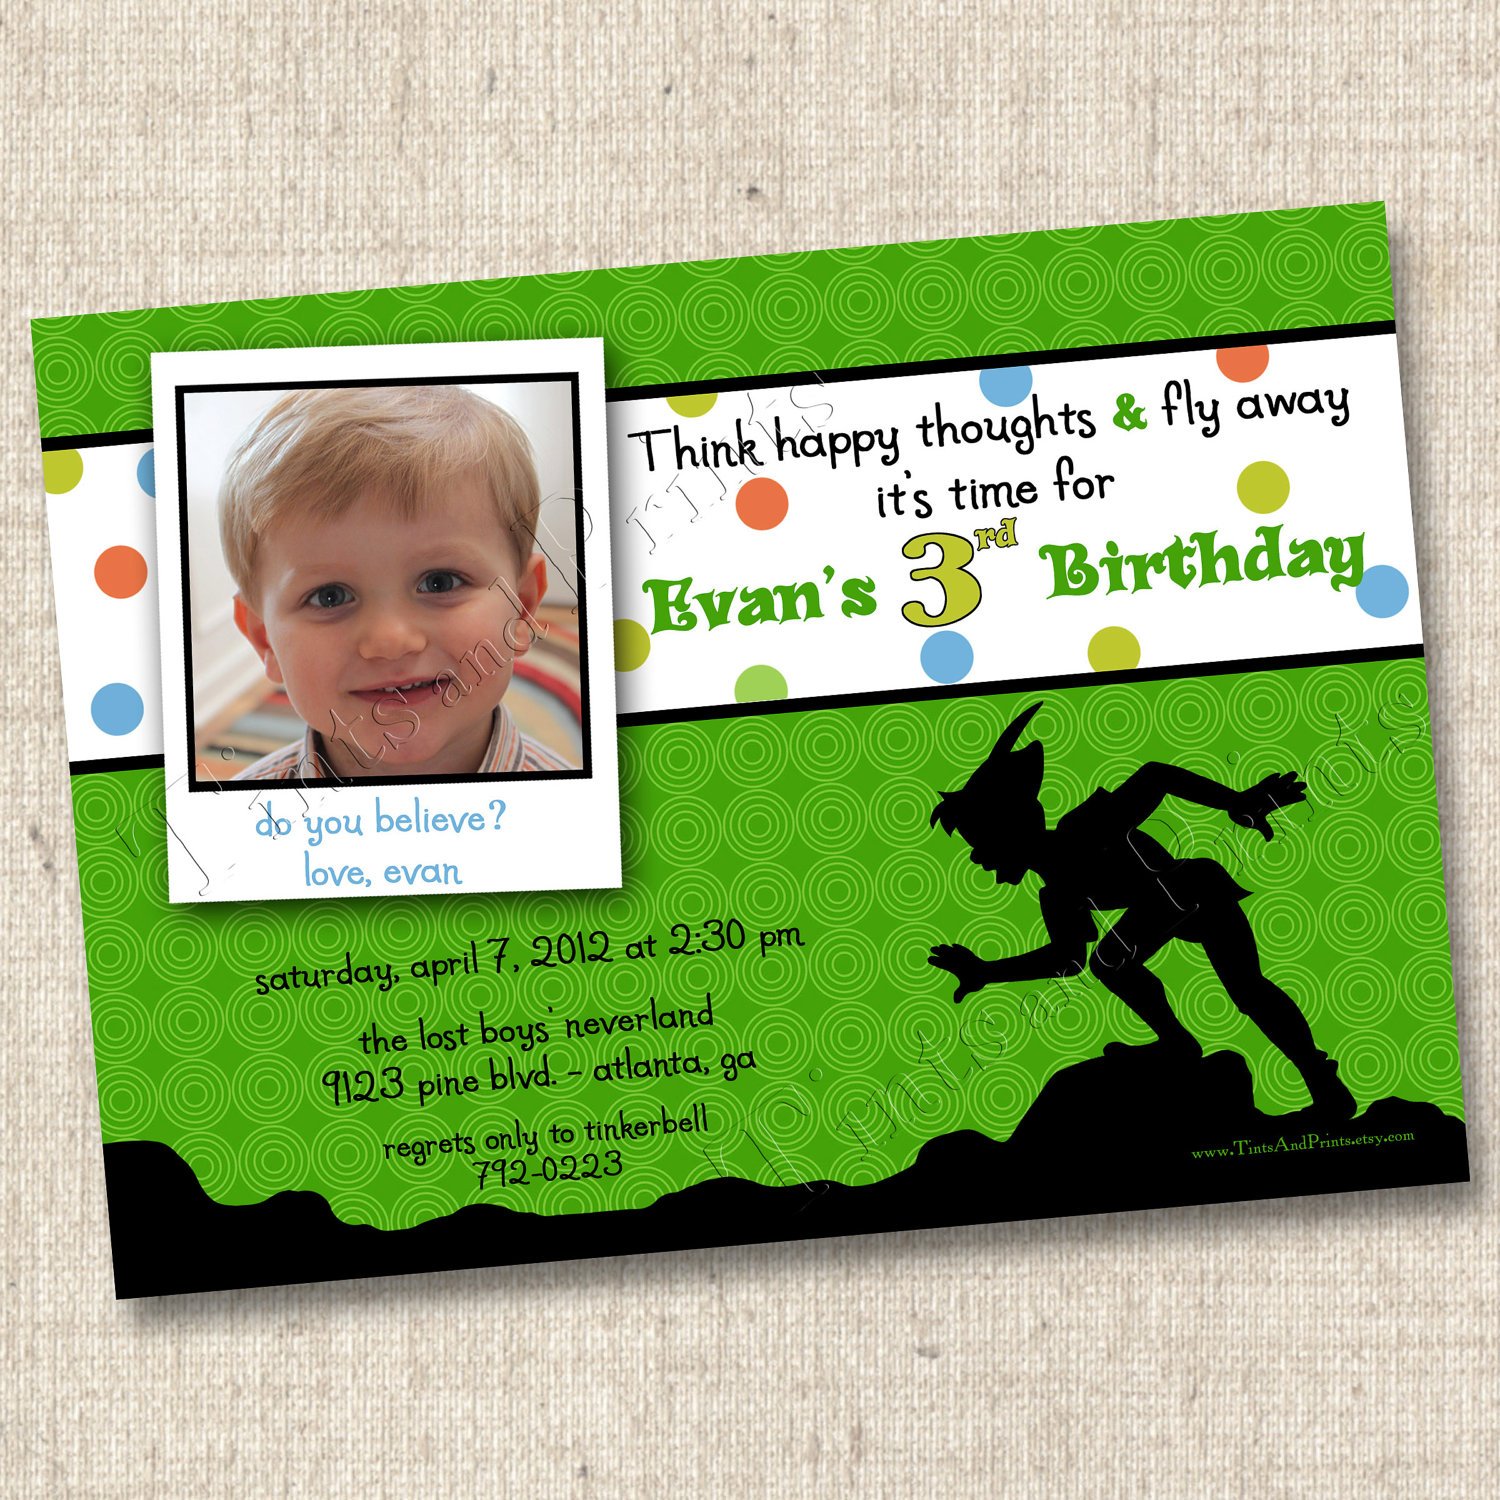 boys peter pan birthday party invitations